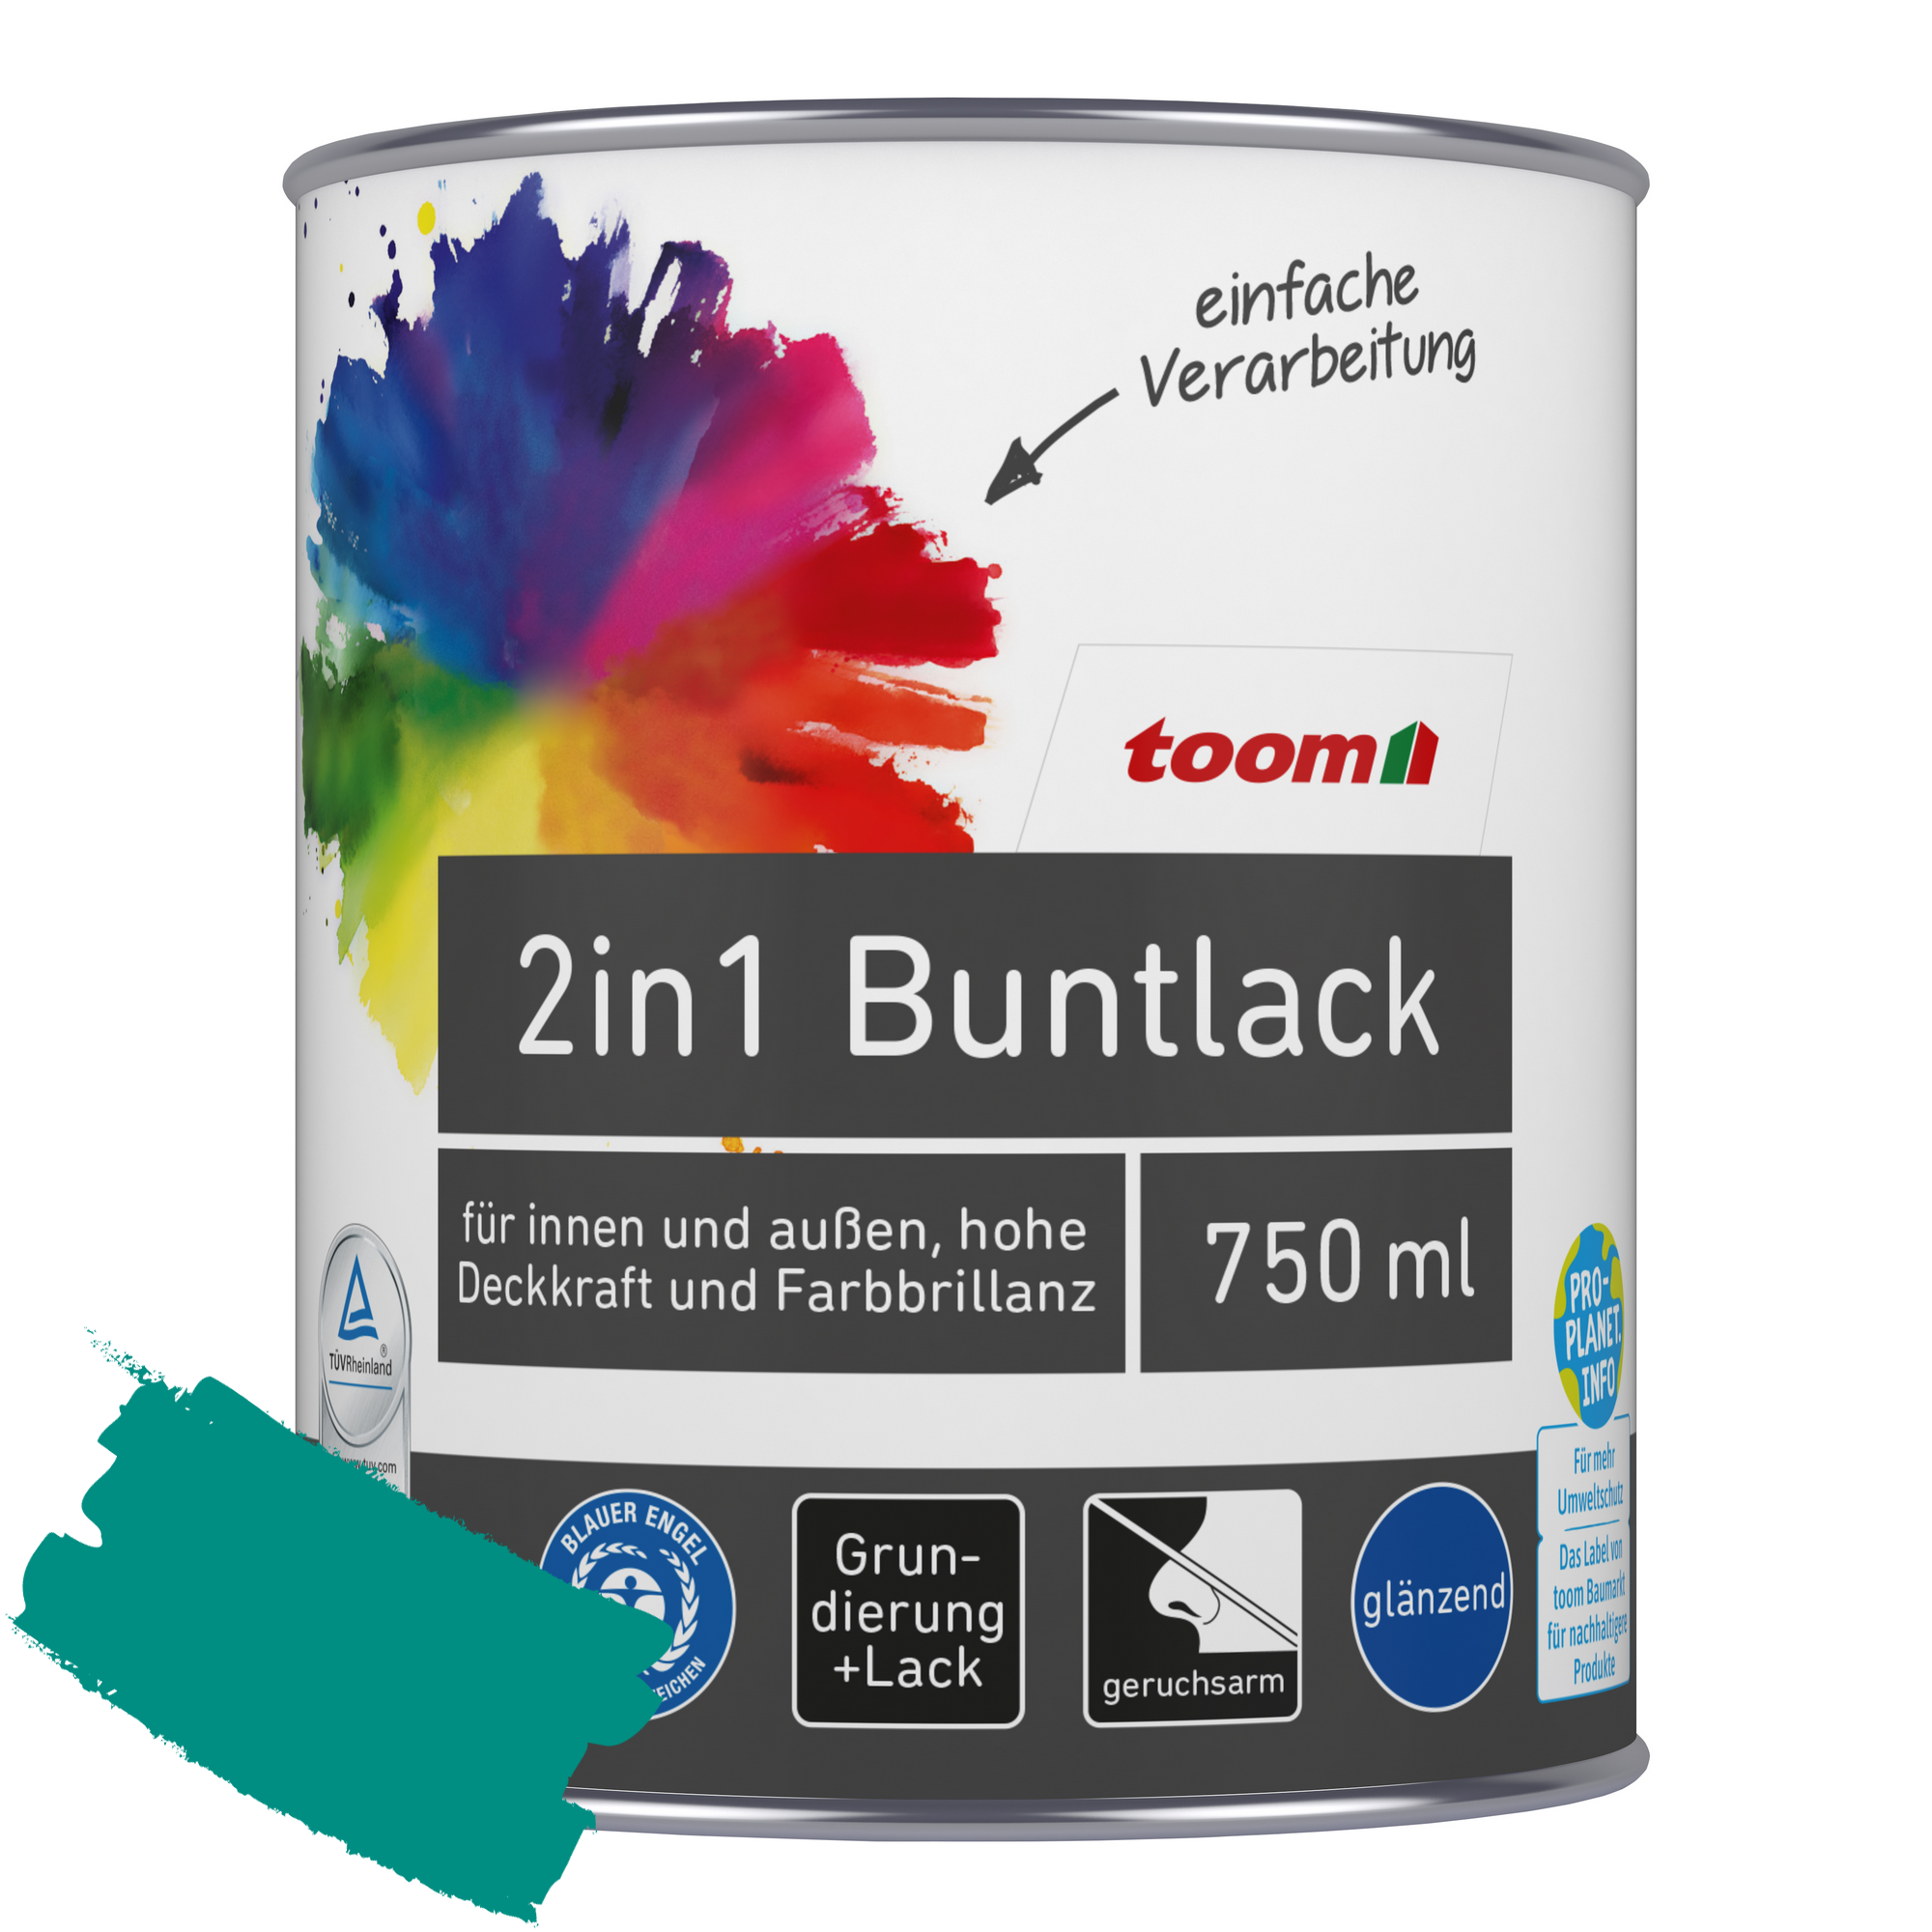 2in1 Buntlack 'Südseetraum' petrolfarben glänzend 750 ml + product picture